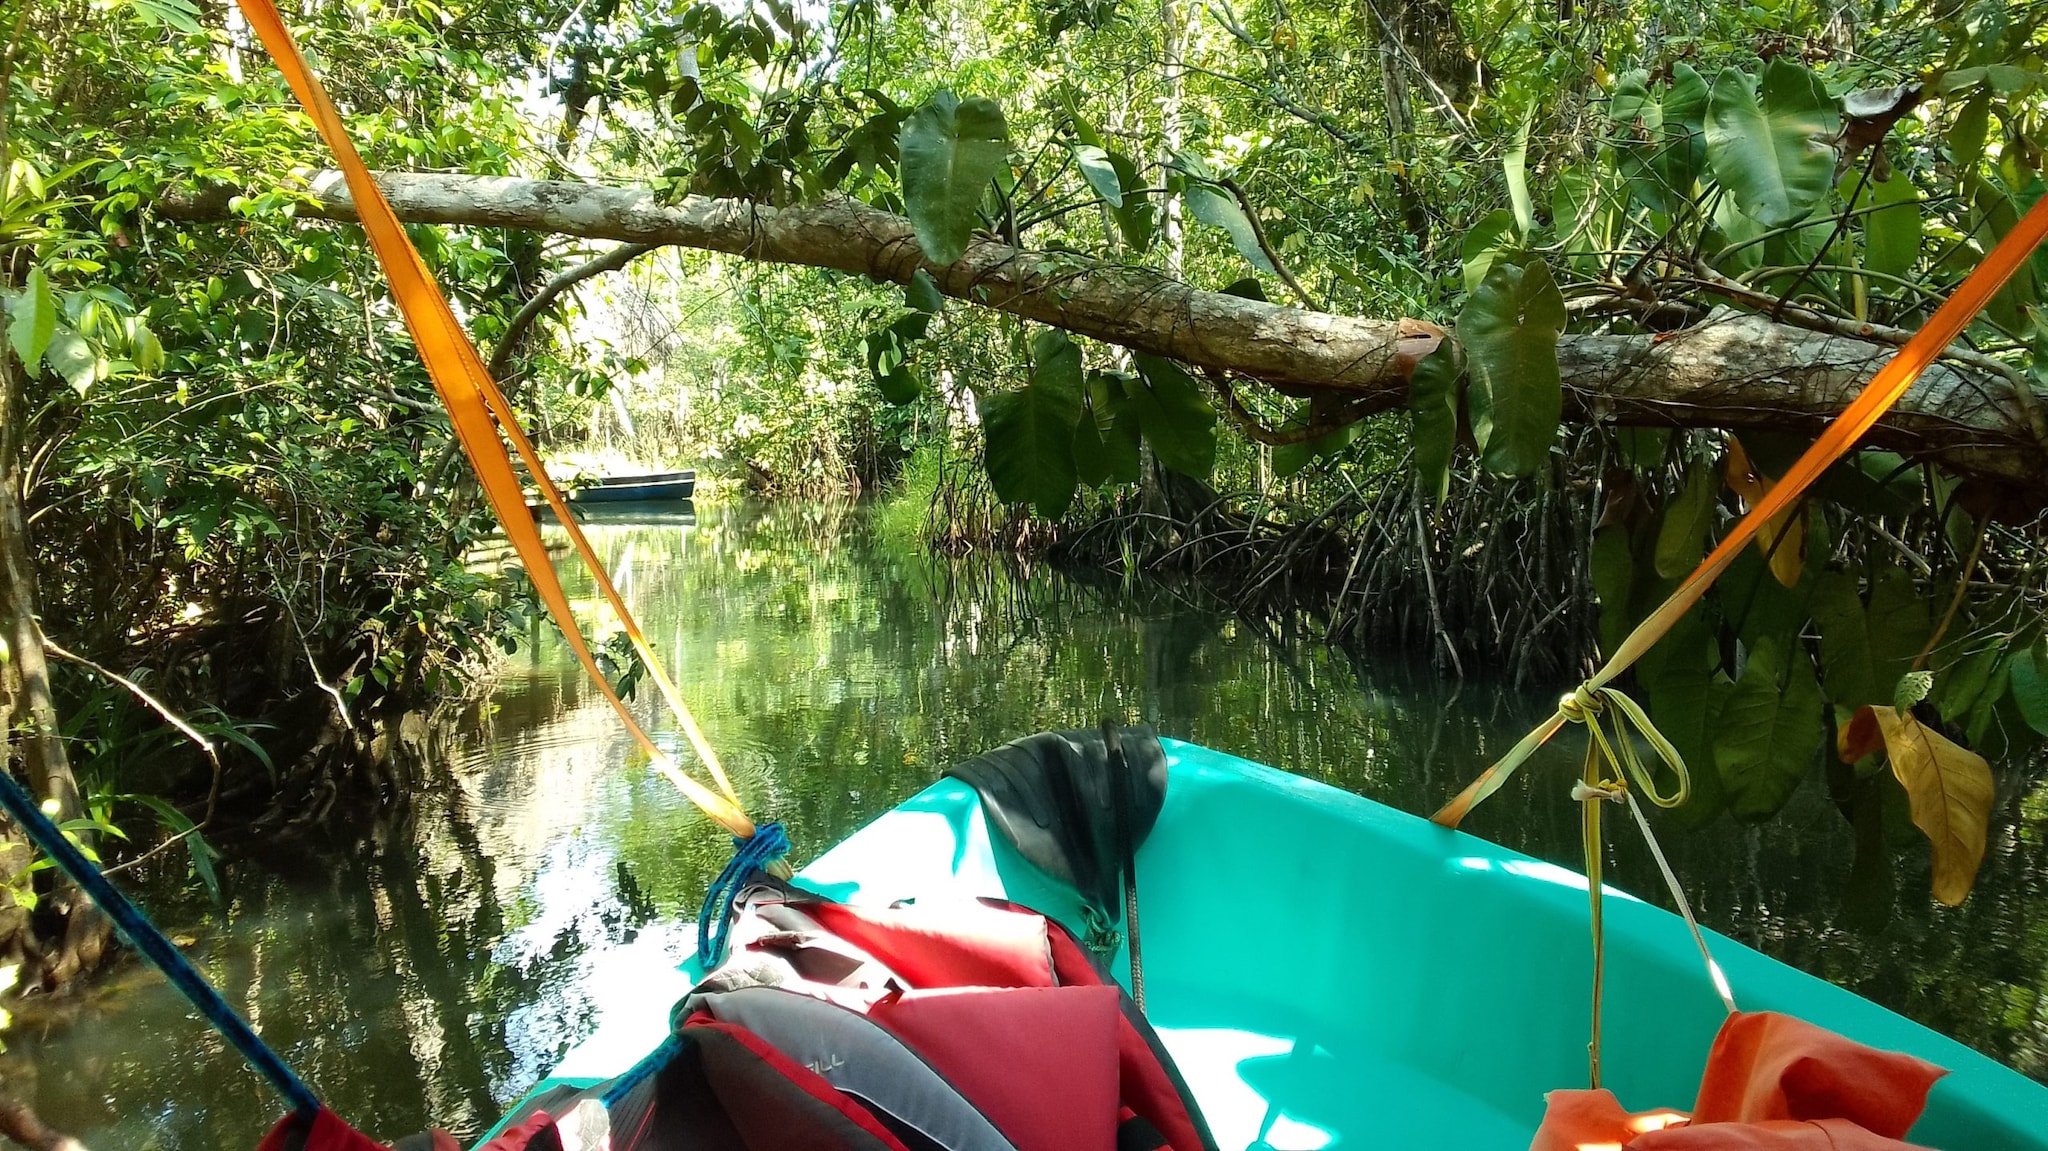 A small boat travels through a narrow river under a tree limb.